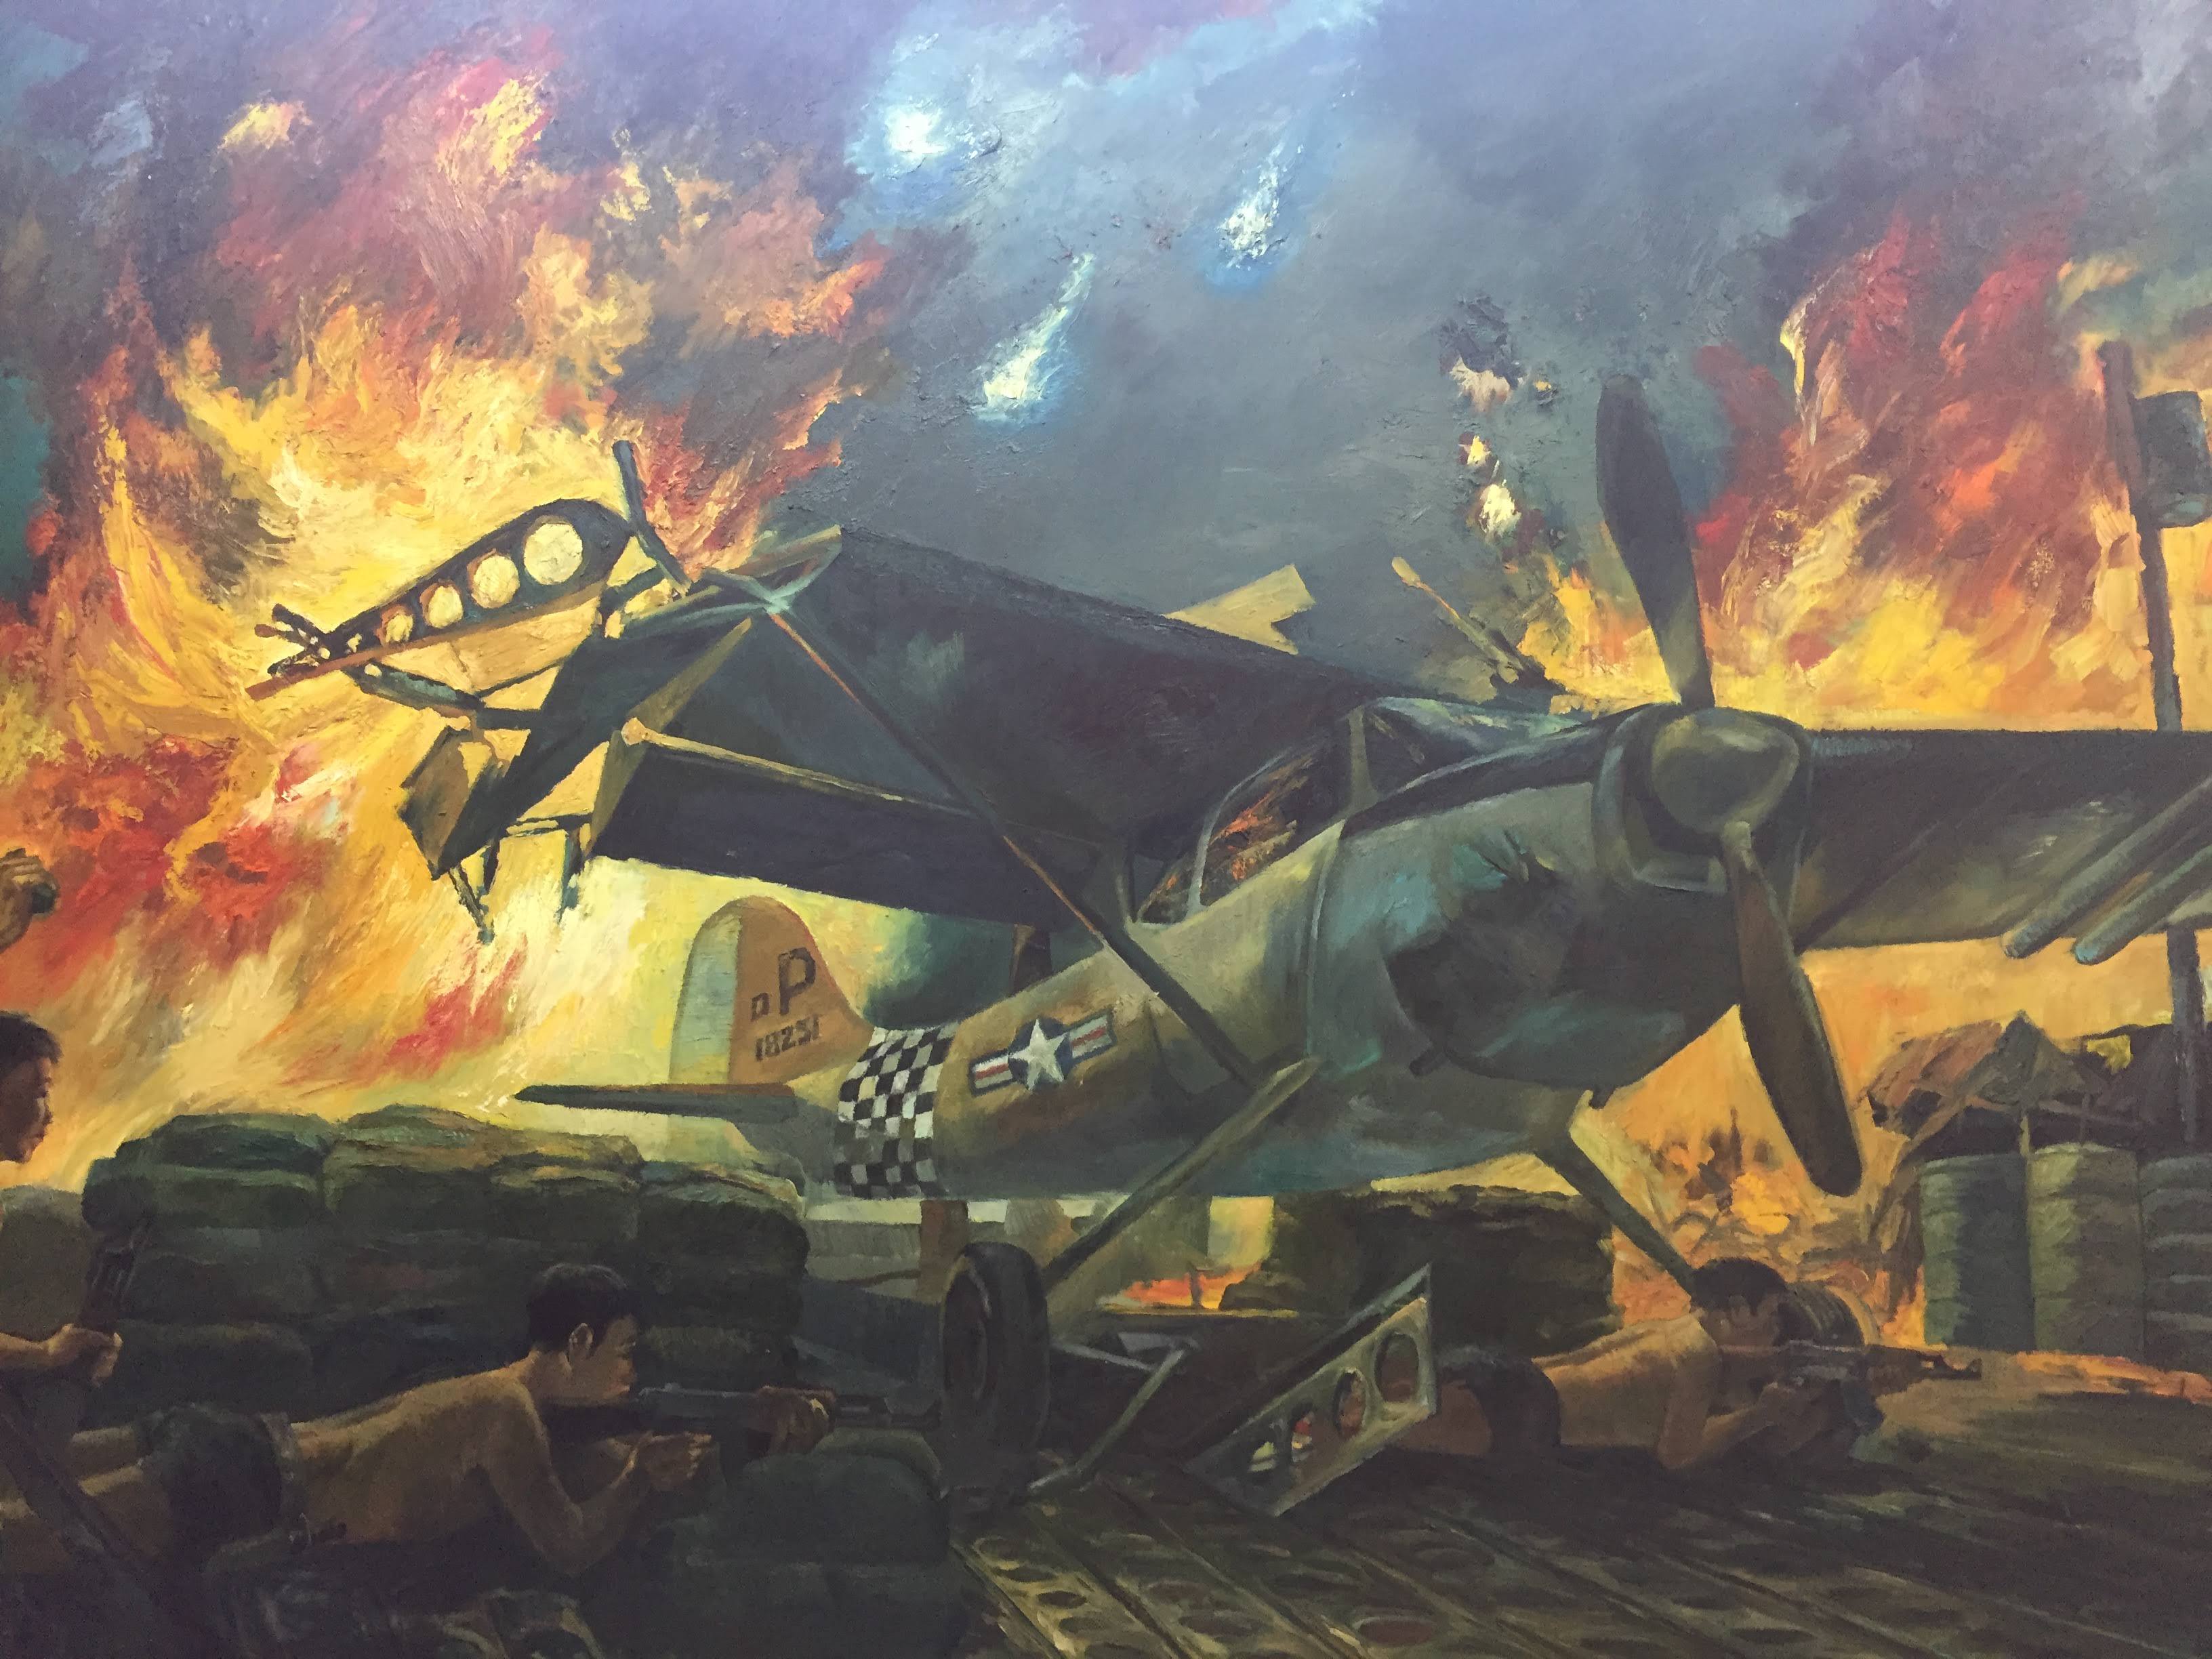 Fire and plane from Vietnam War